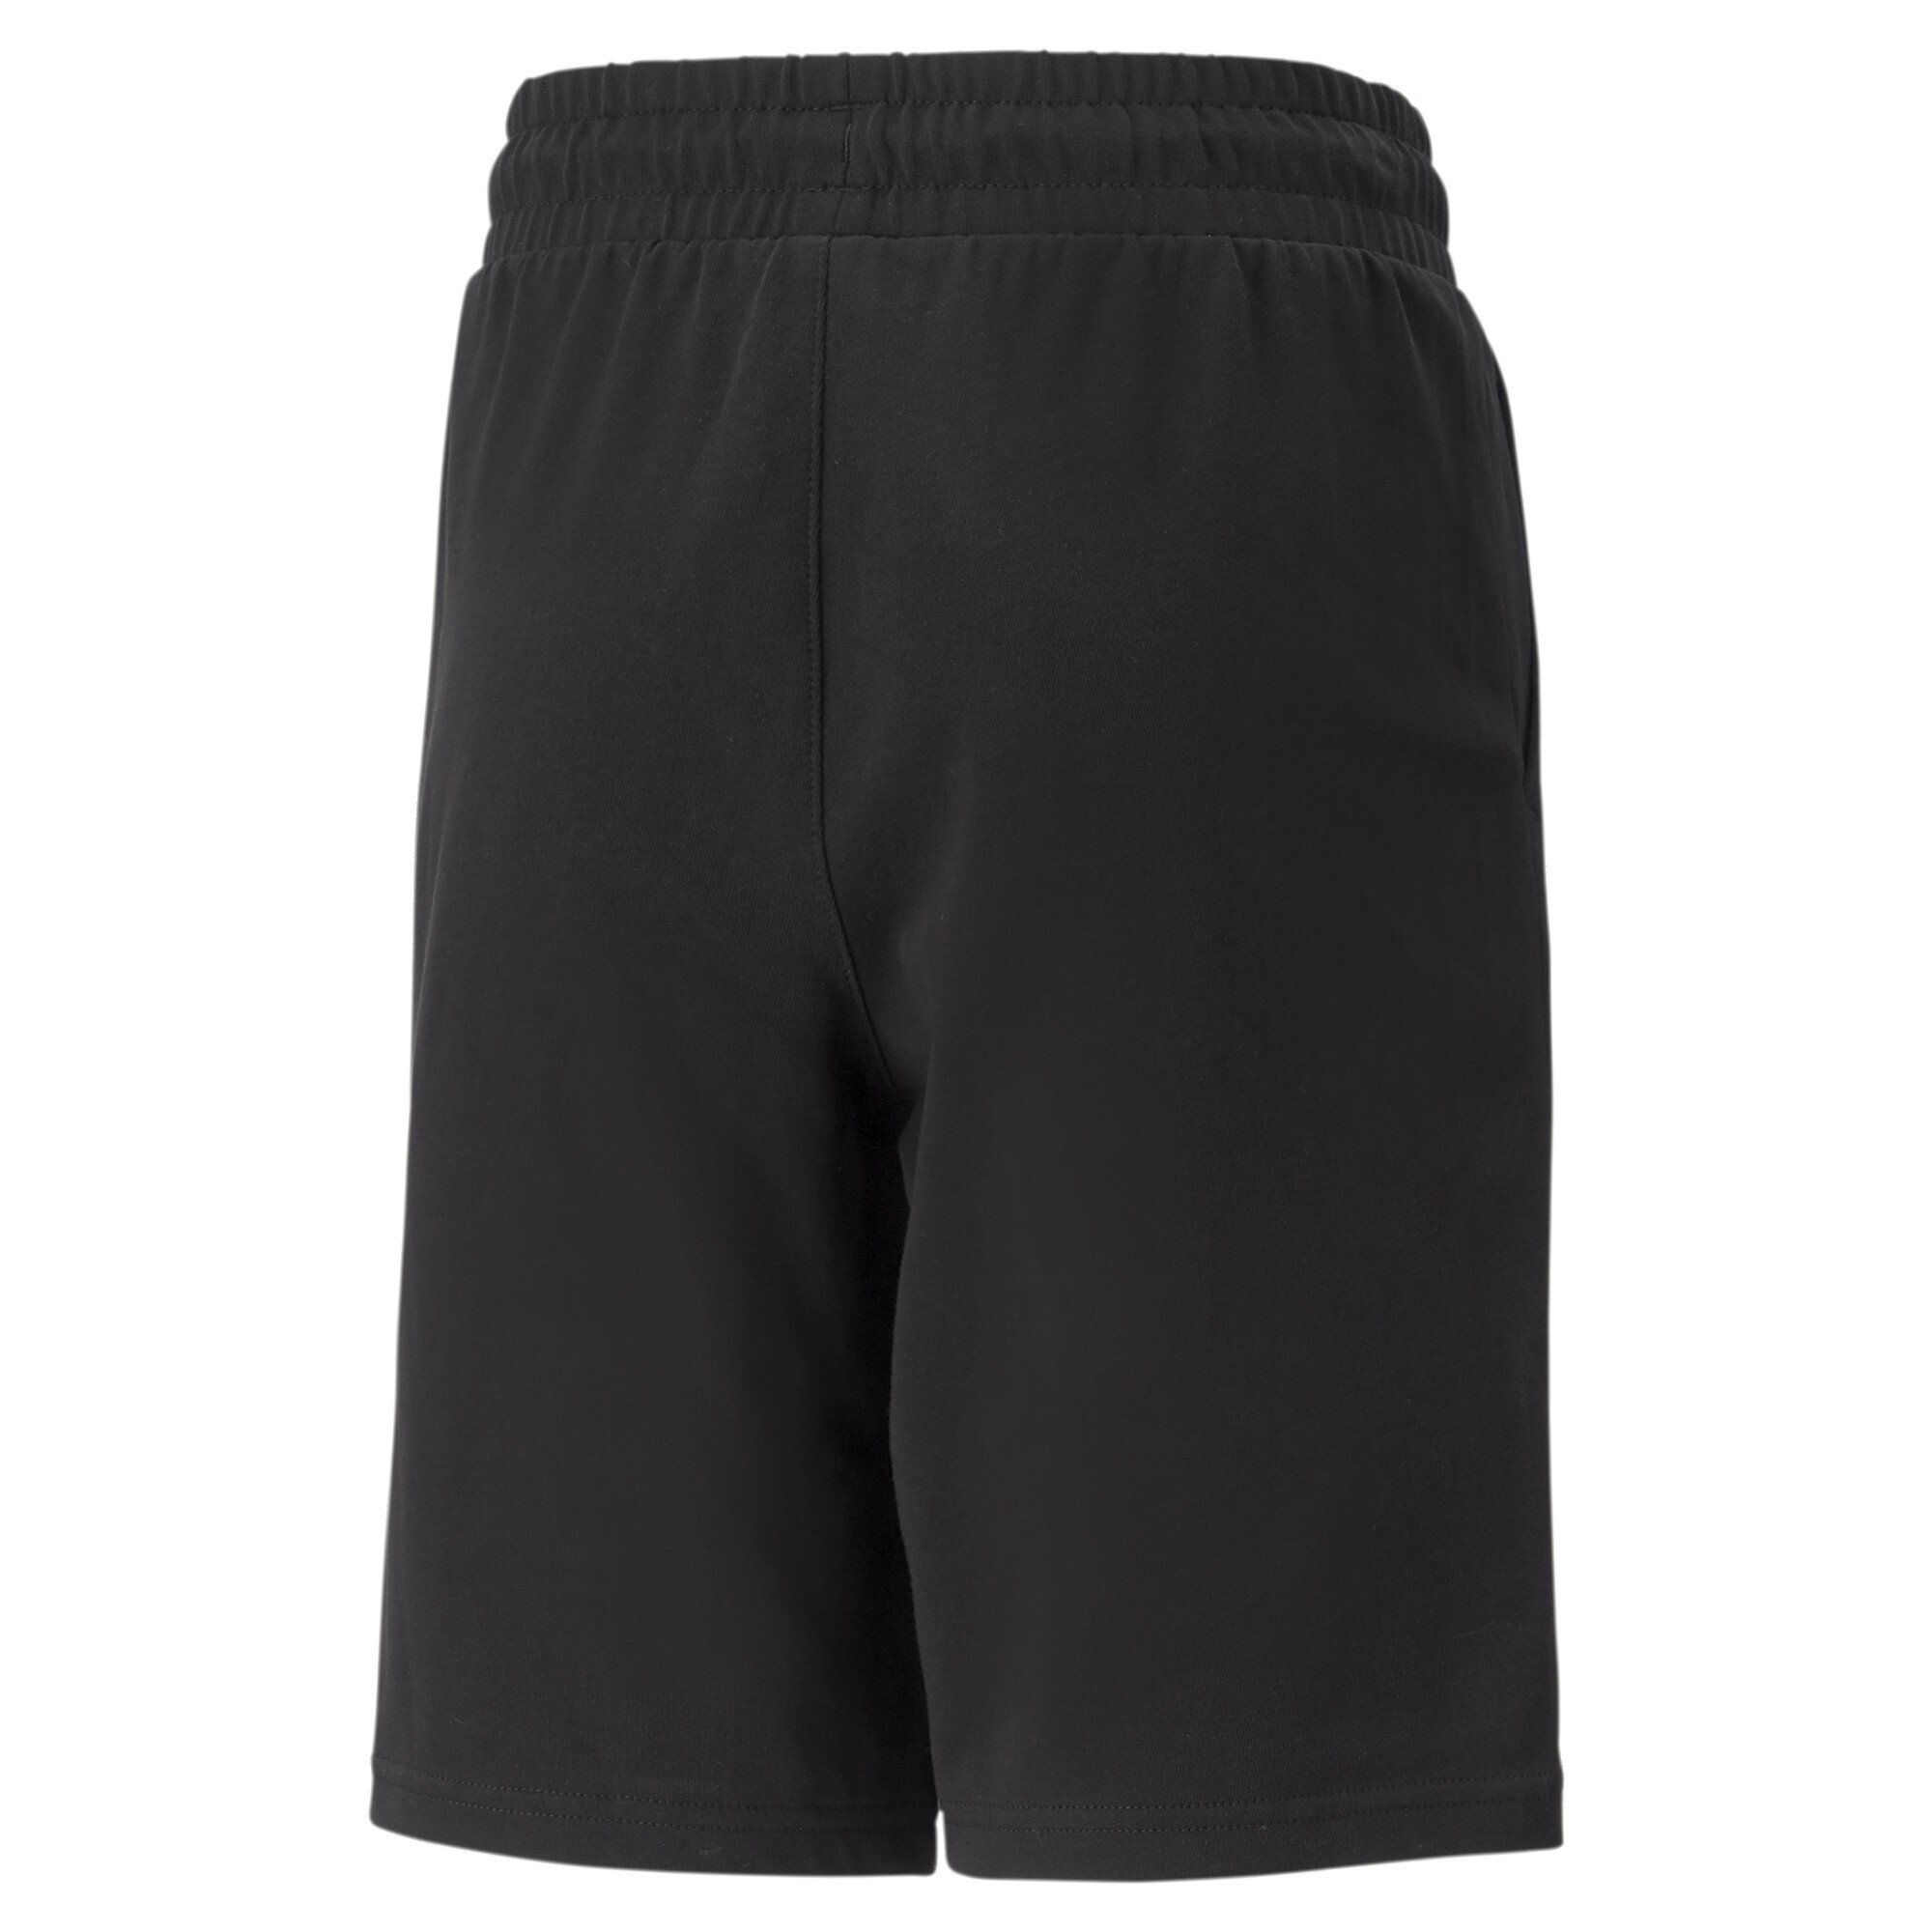 PUMA Alpha Shorts In Black, Size 4-5 Youth